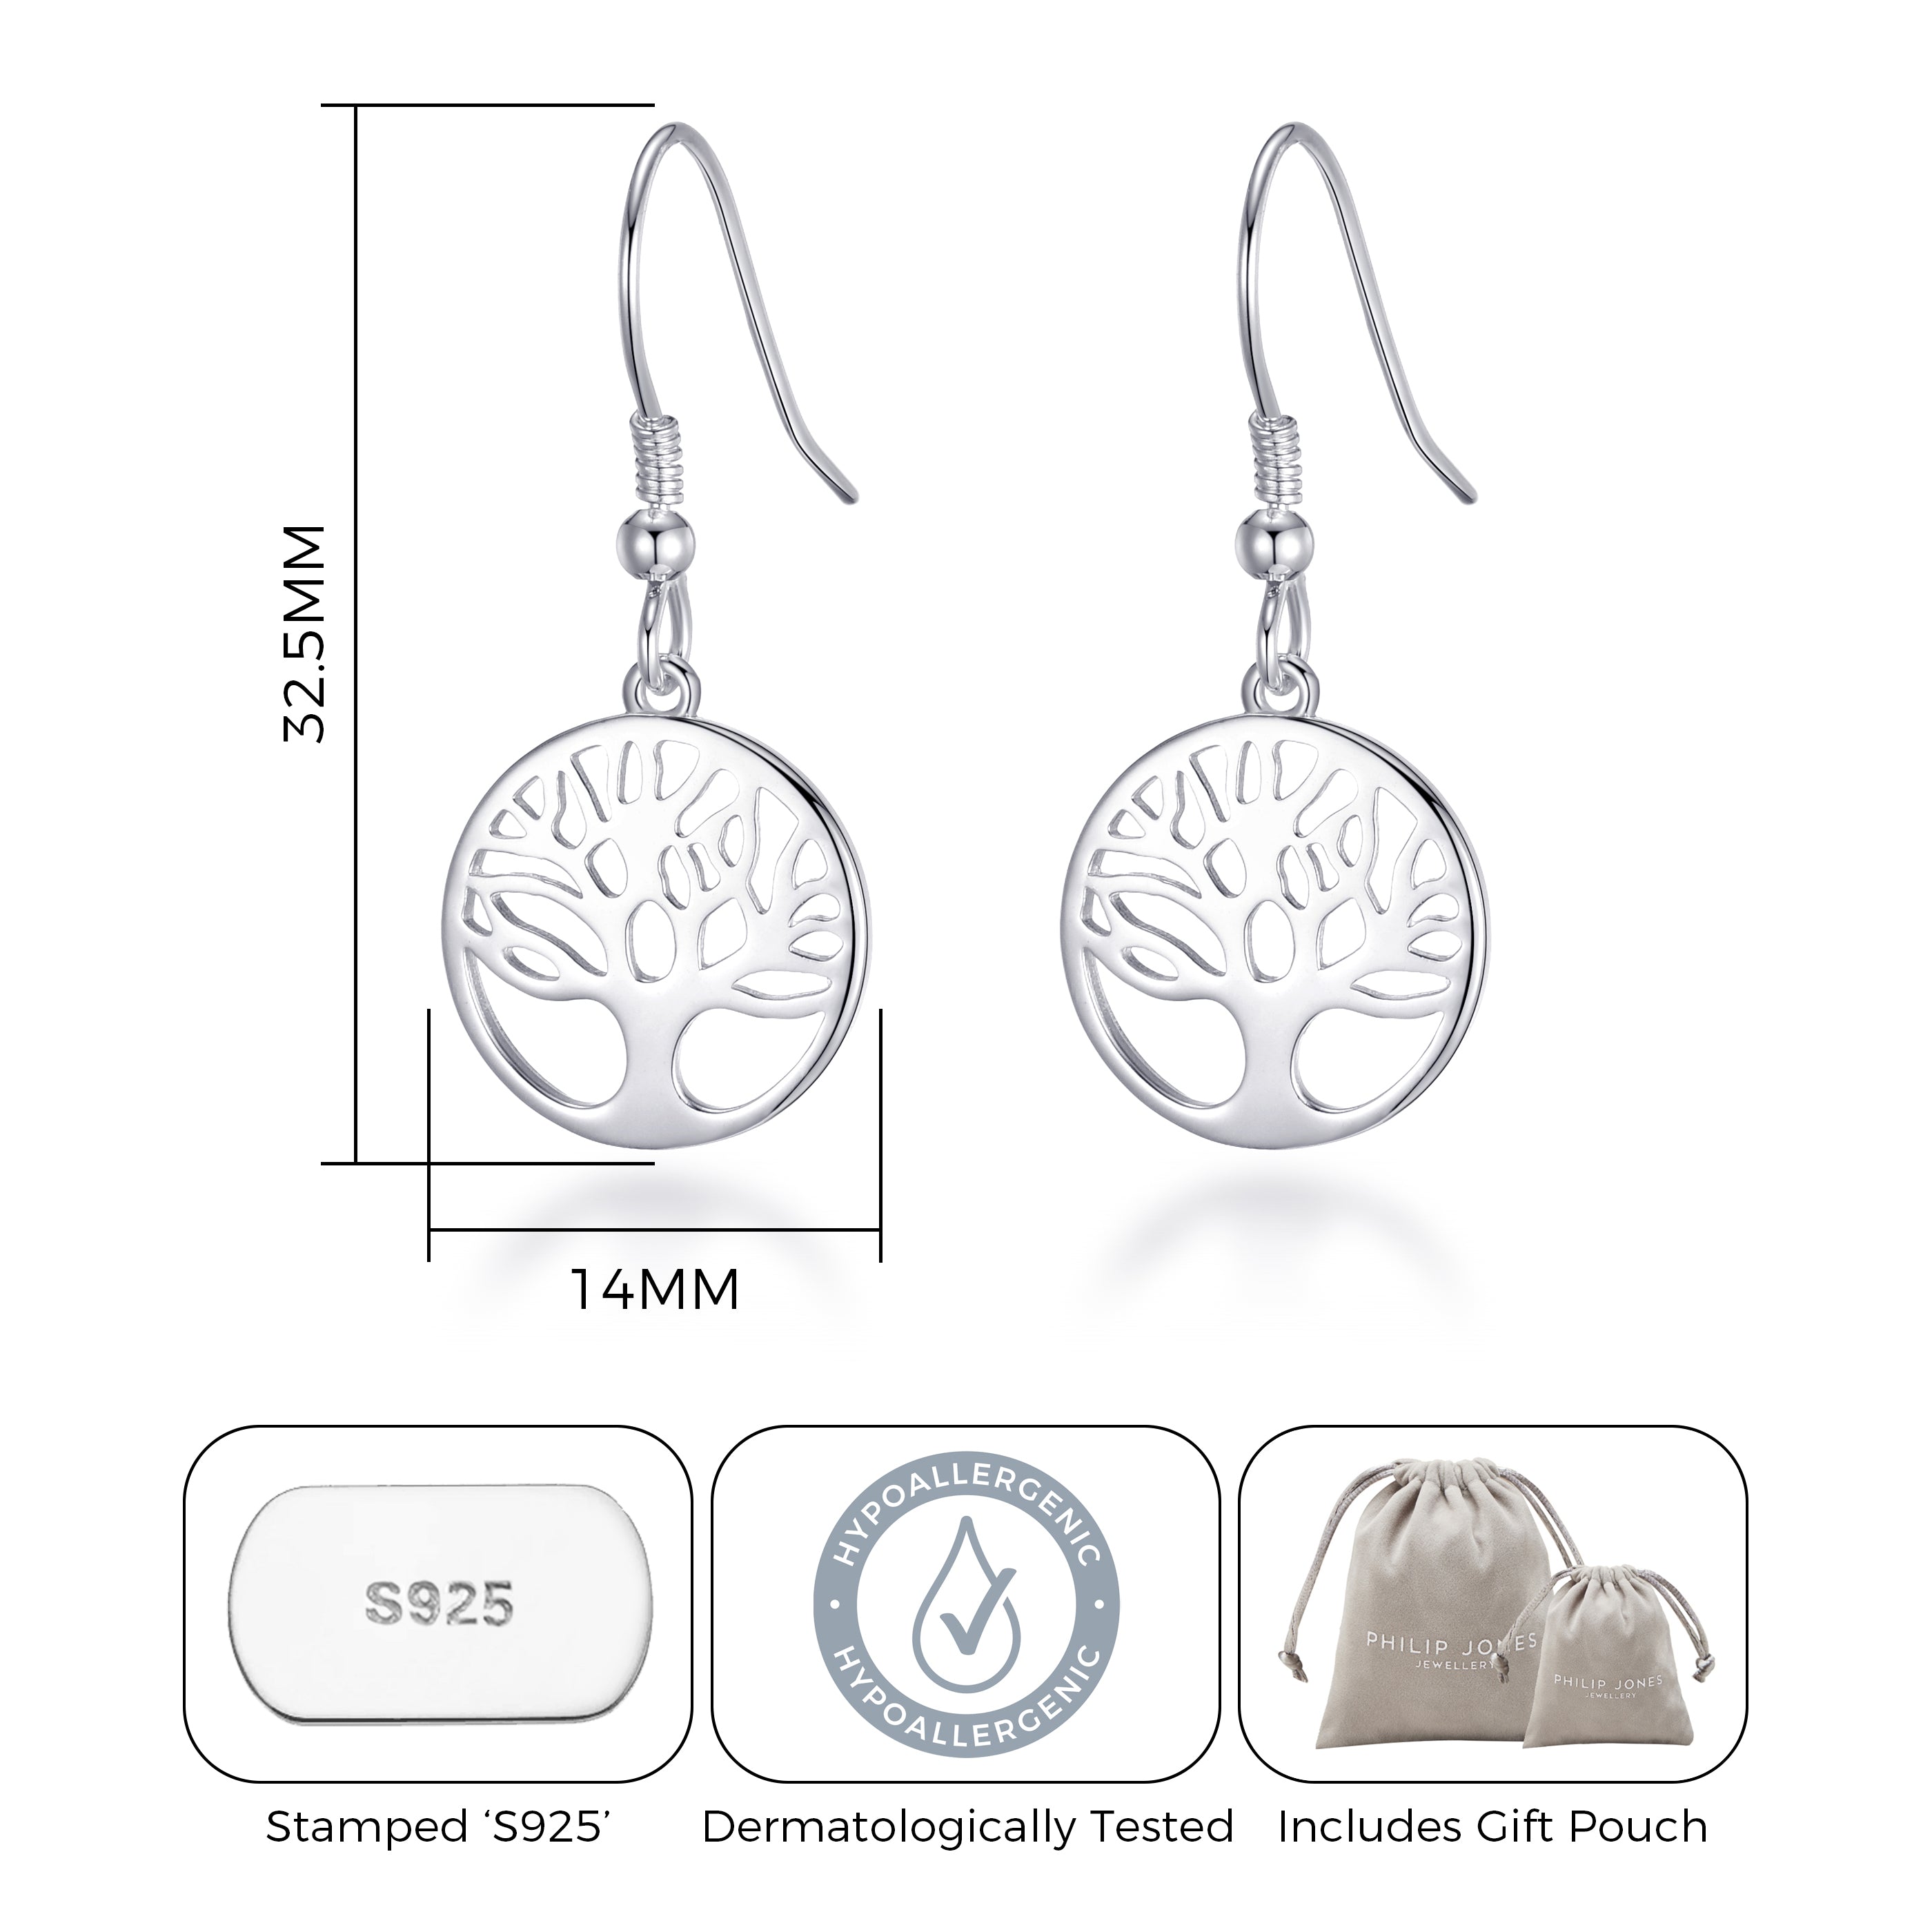 Sterling Silver Tree of Life Drop Earrings